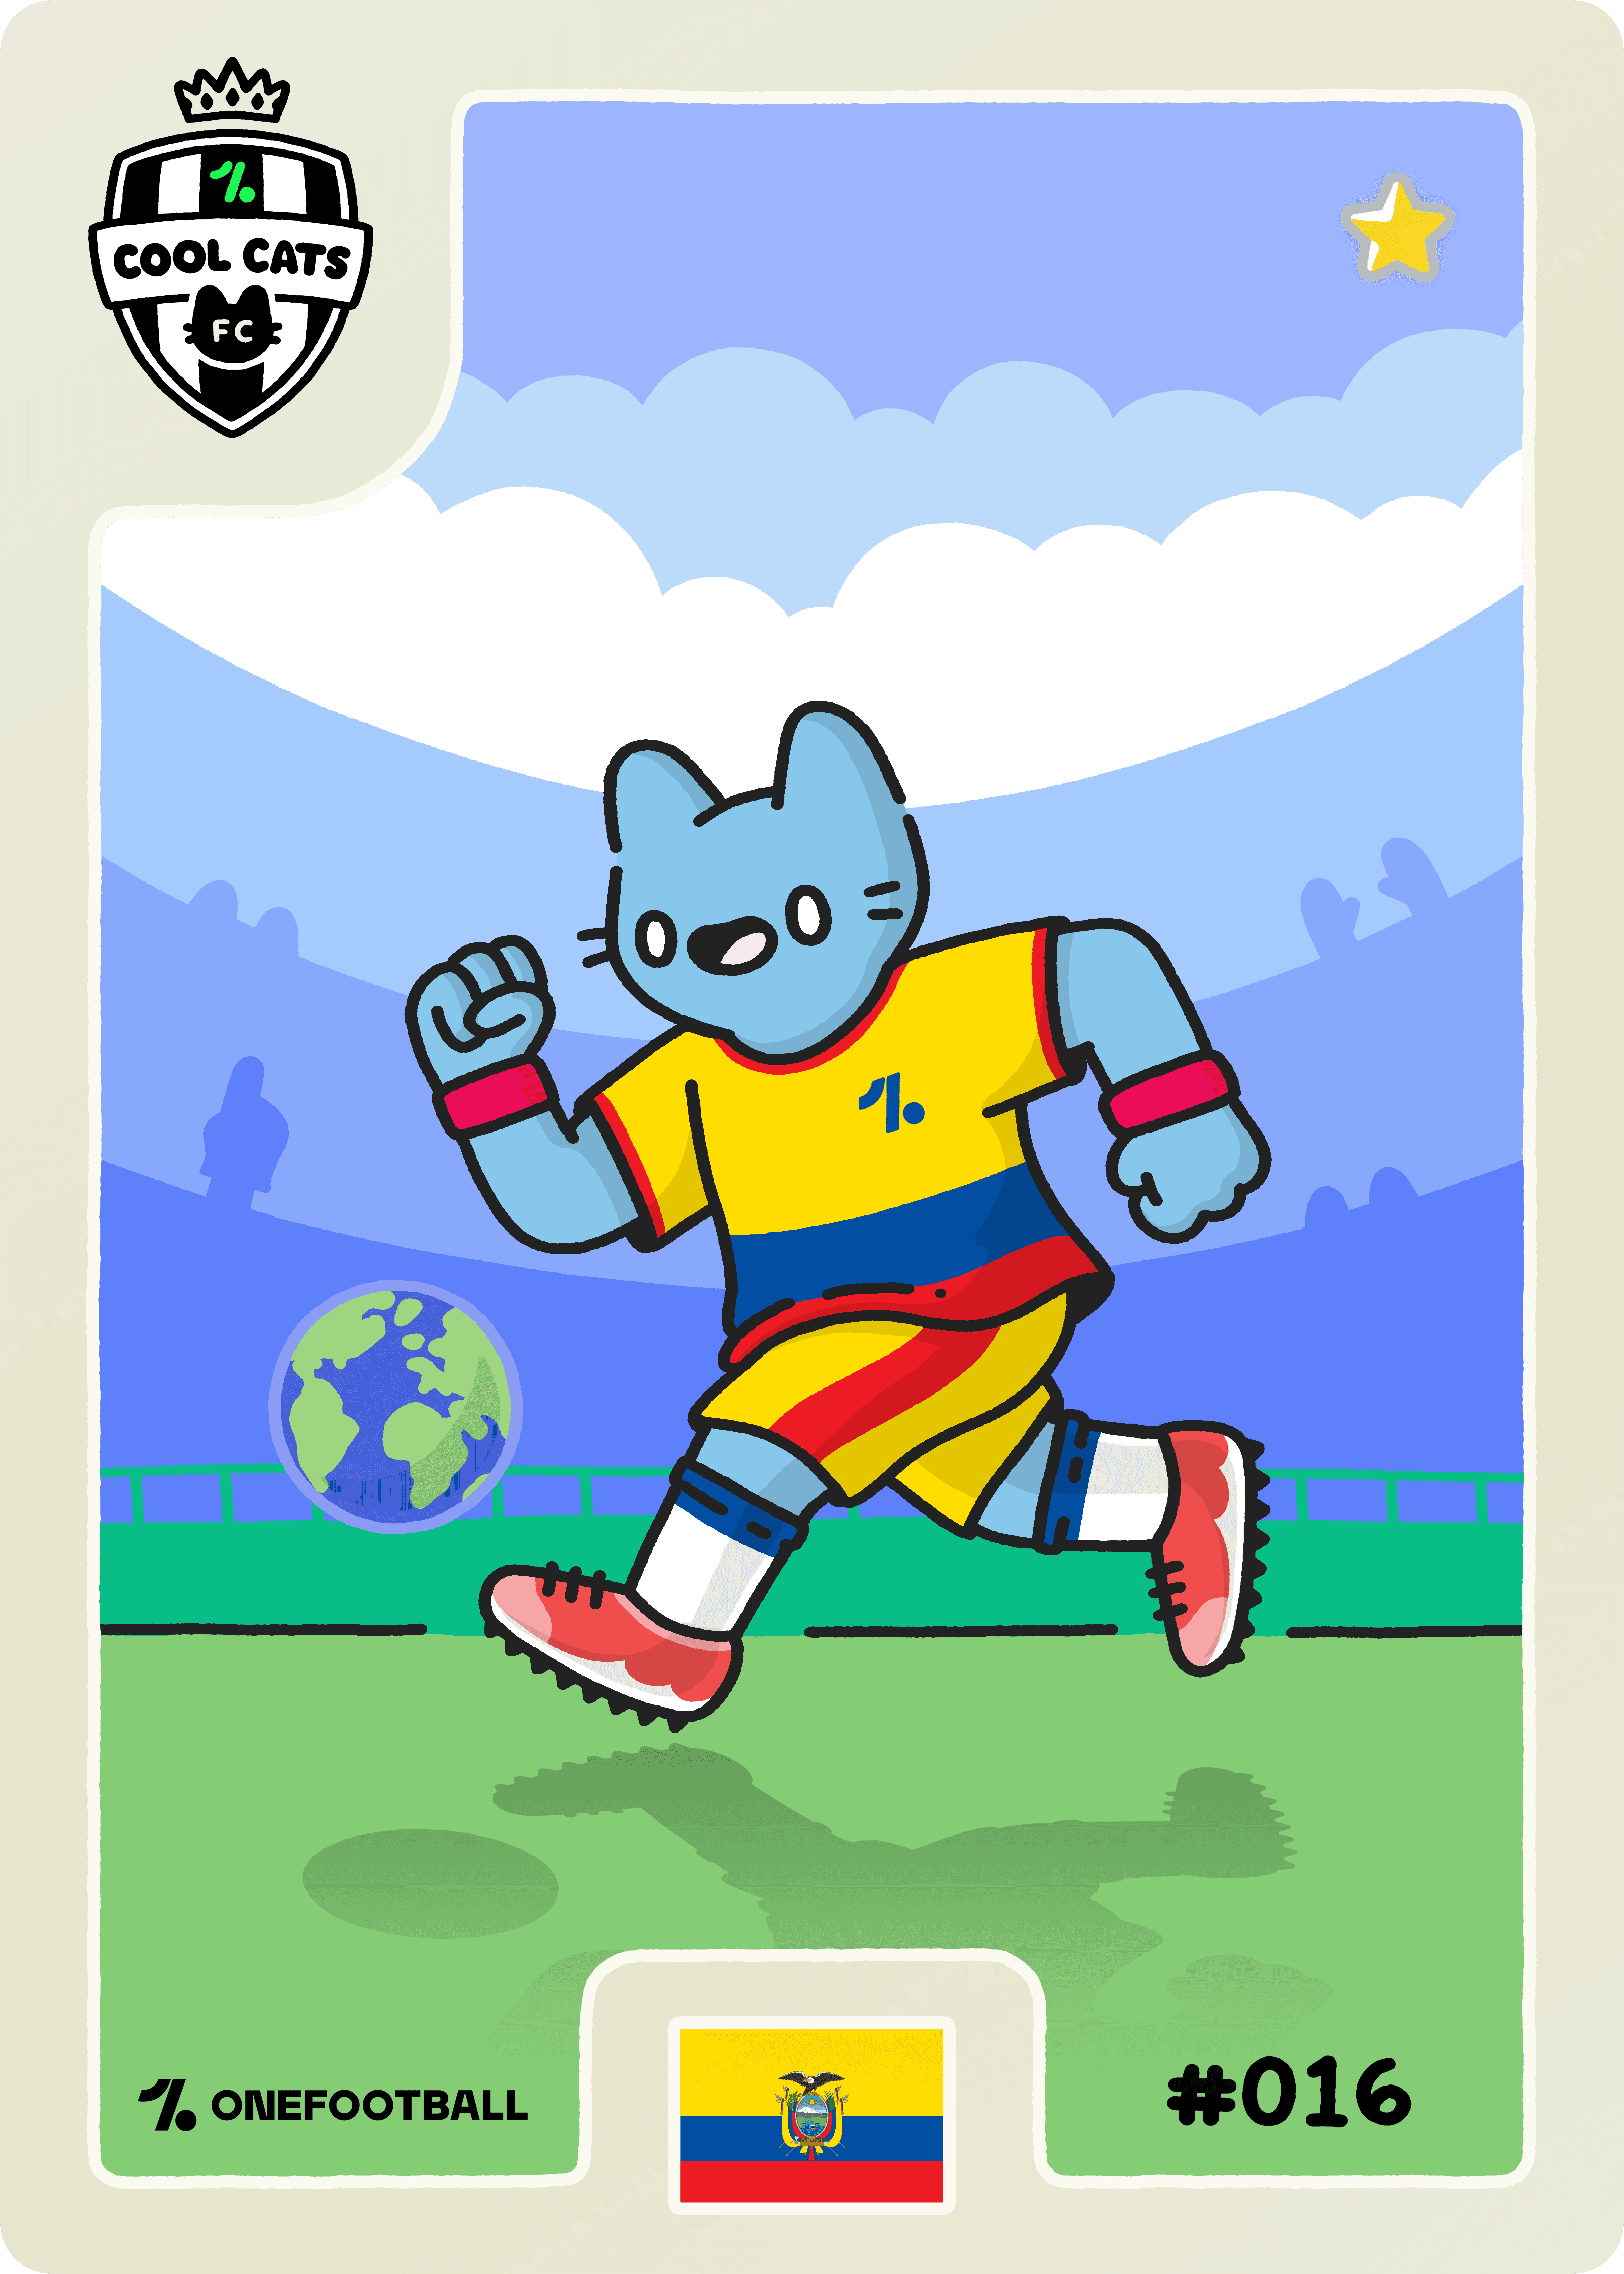 Cool Cats Football Club #2282